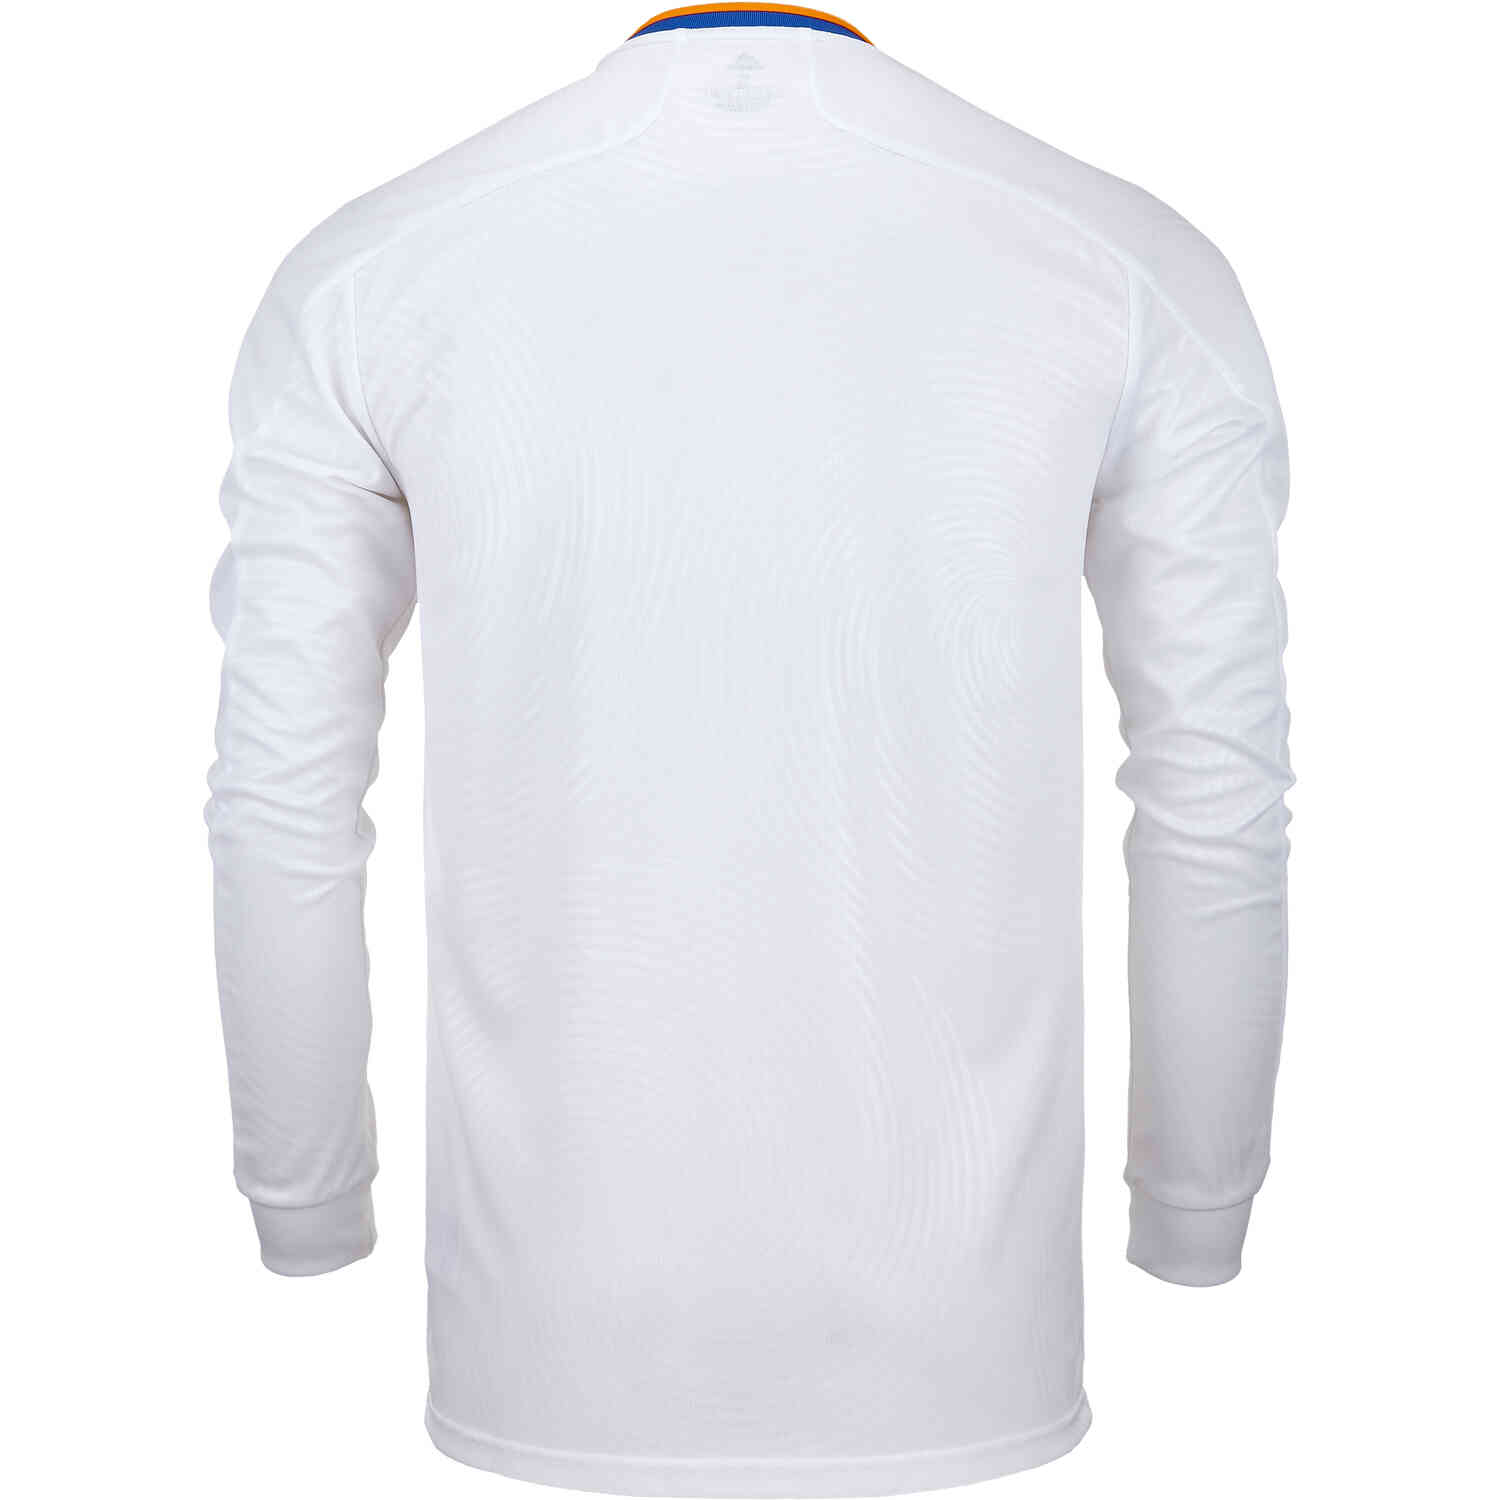 Adidas Real Madrid Home 21-22 soccer jersey White Blue Orange Size L Men 